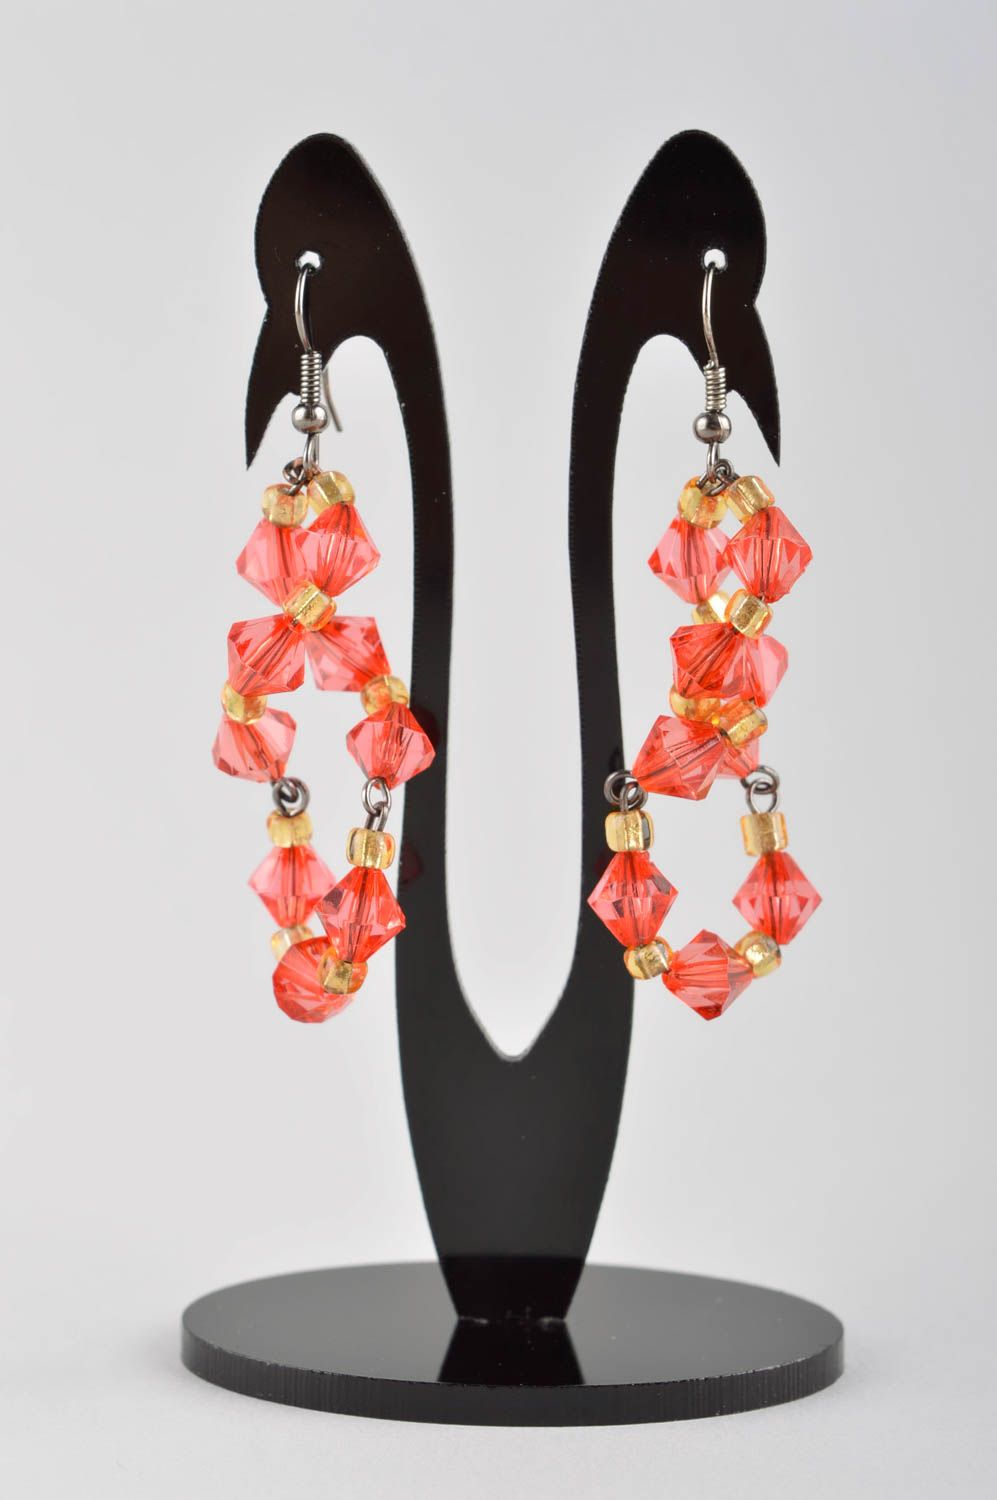 Handmade earrings designer accessories for women ladies earrings gifts for girls photo 2